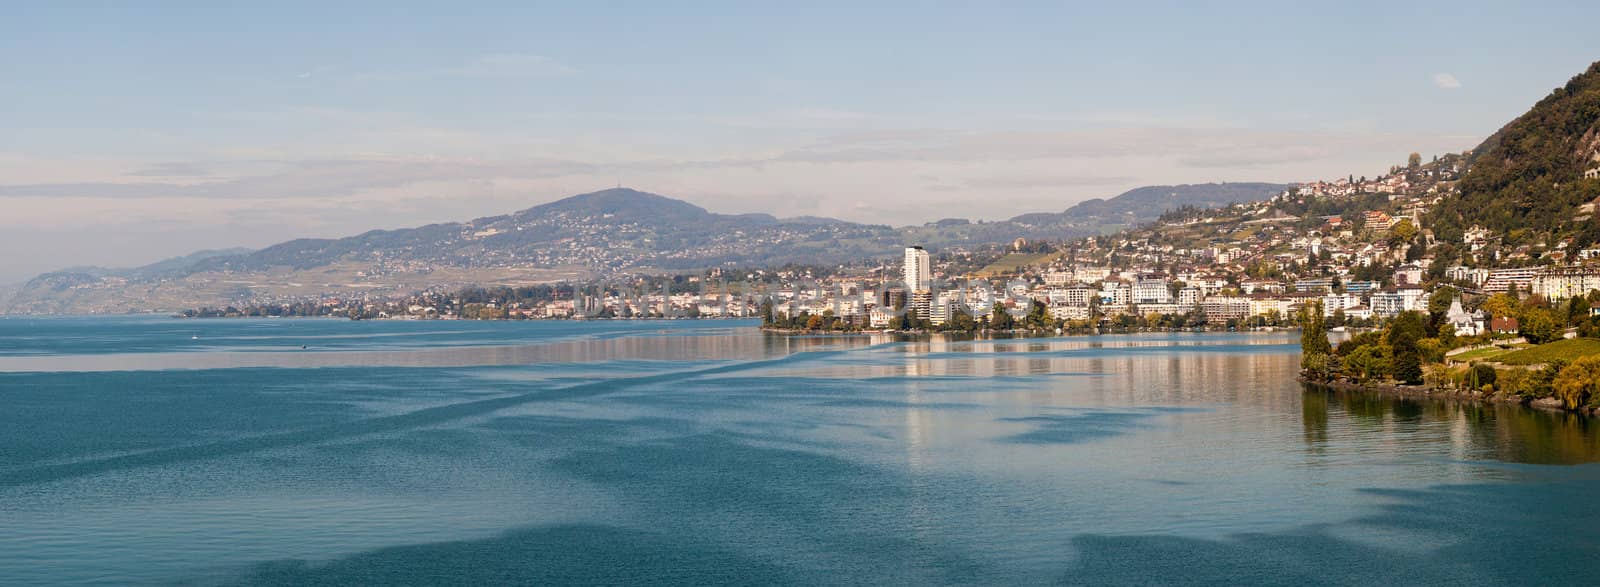 Lake Geneva in the Montruex by ailani_graphics